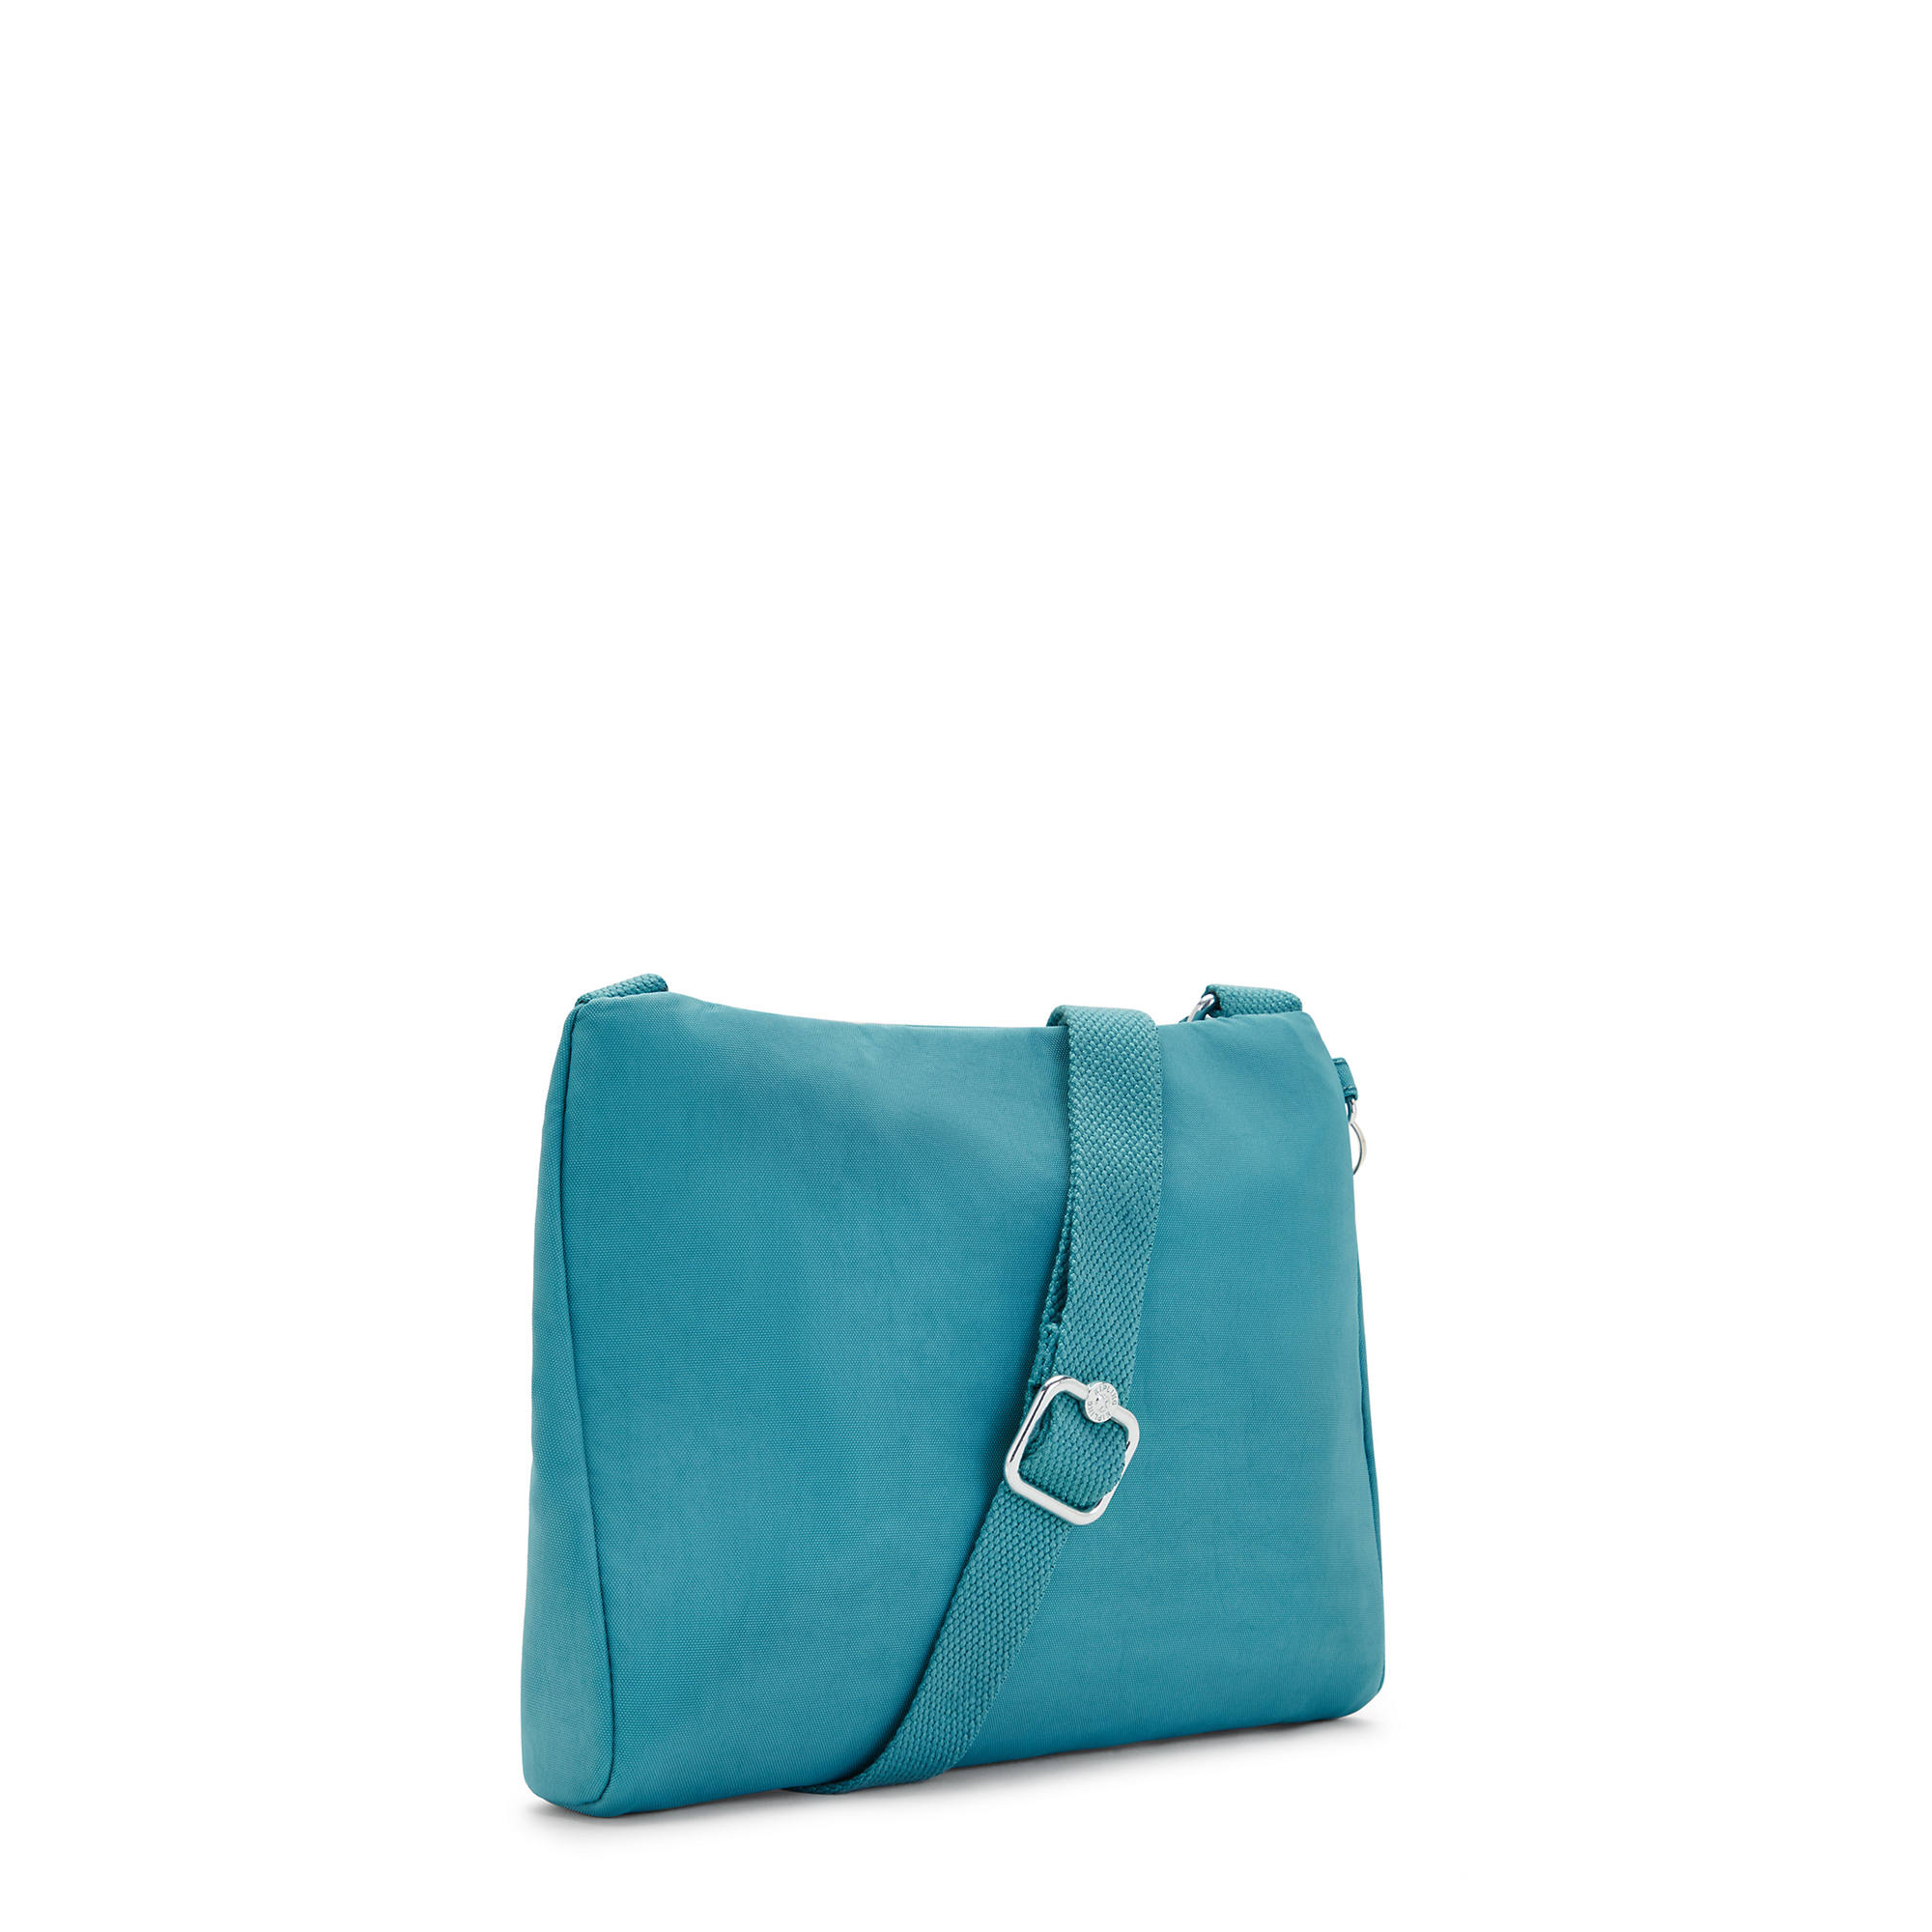 Kipling Women's Merriweather Crossbody Bag with Adjustable Strap | eBay